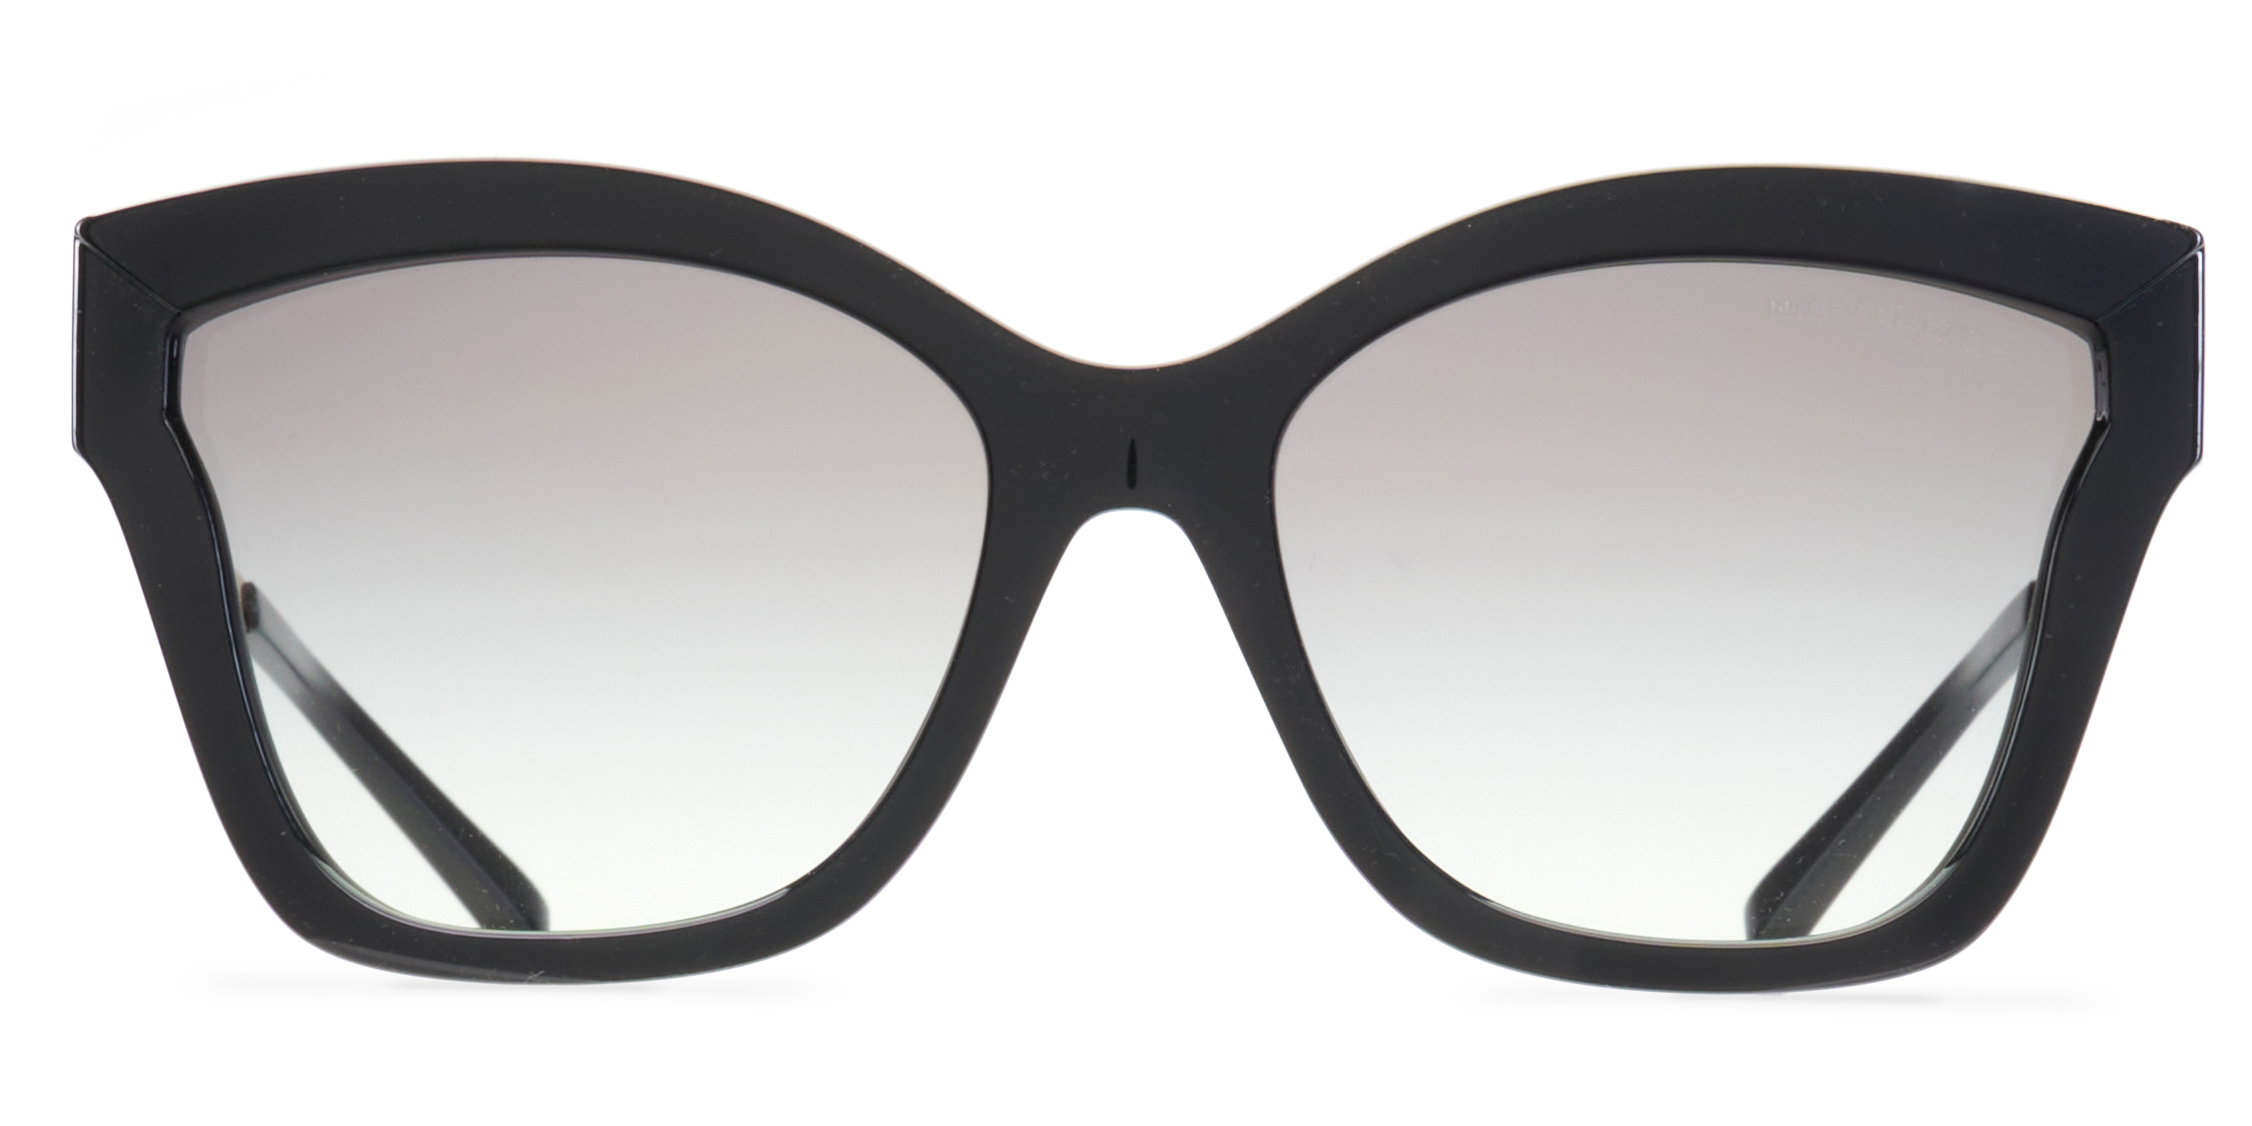 Michael Kors Sunglasses MK2072 333211 56